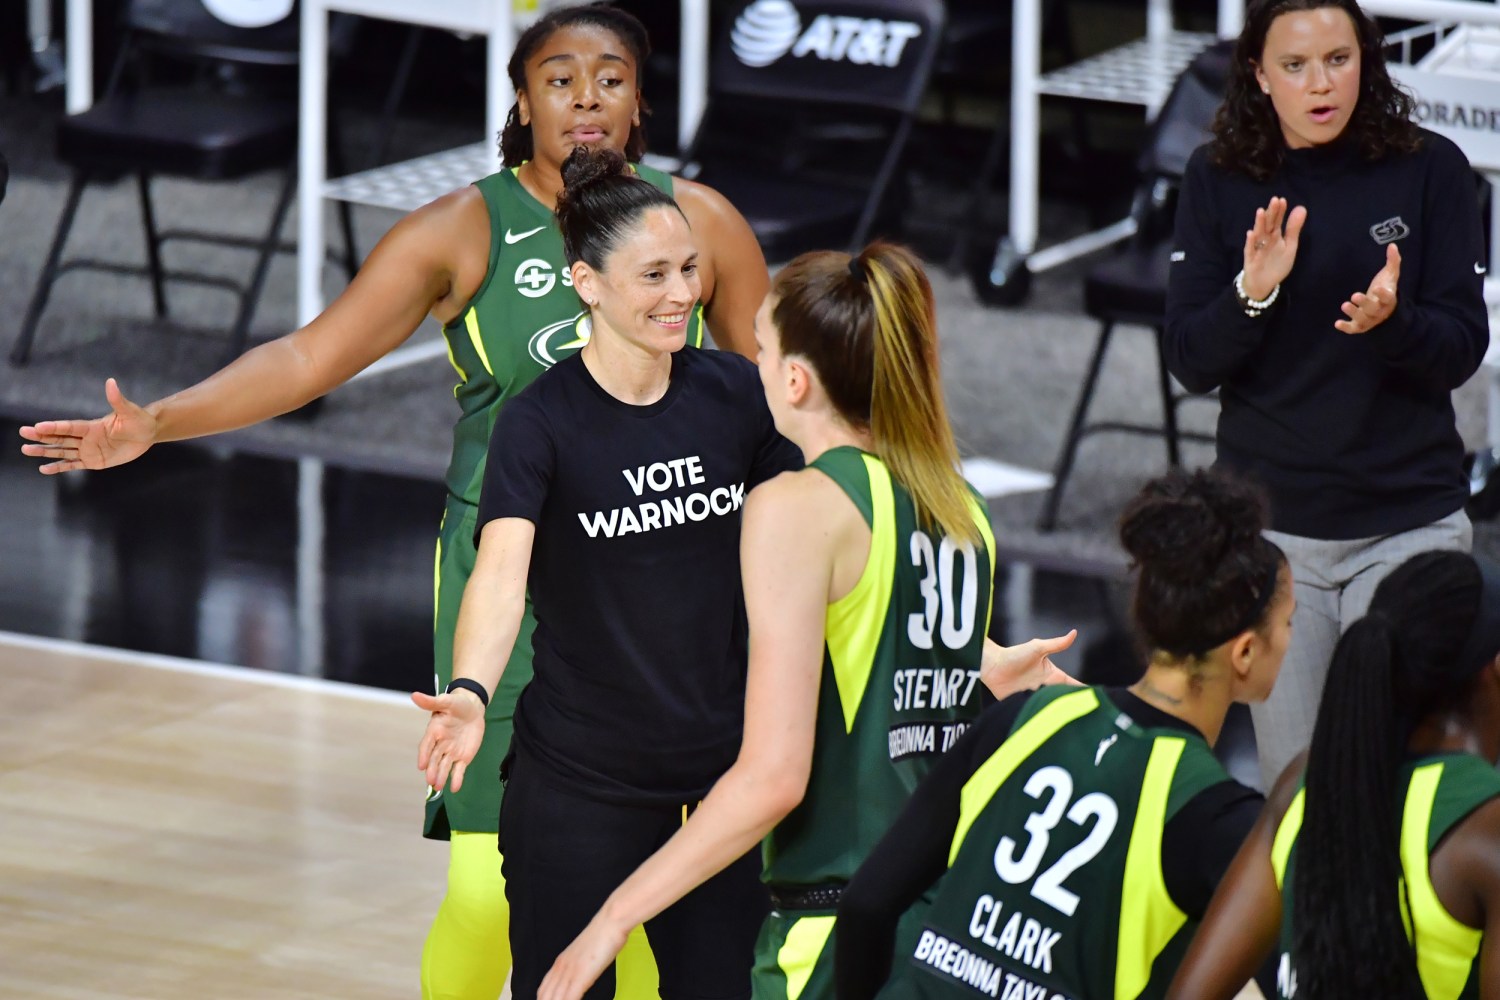 Is the WNBA Entering the Fashion Rivalry?, dapperQ